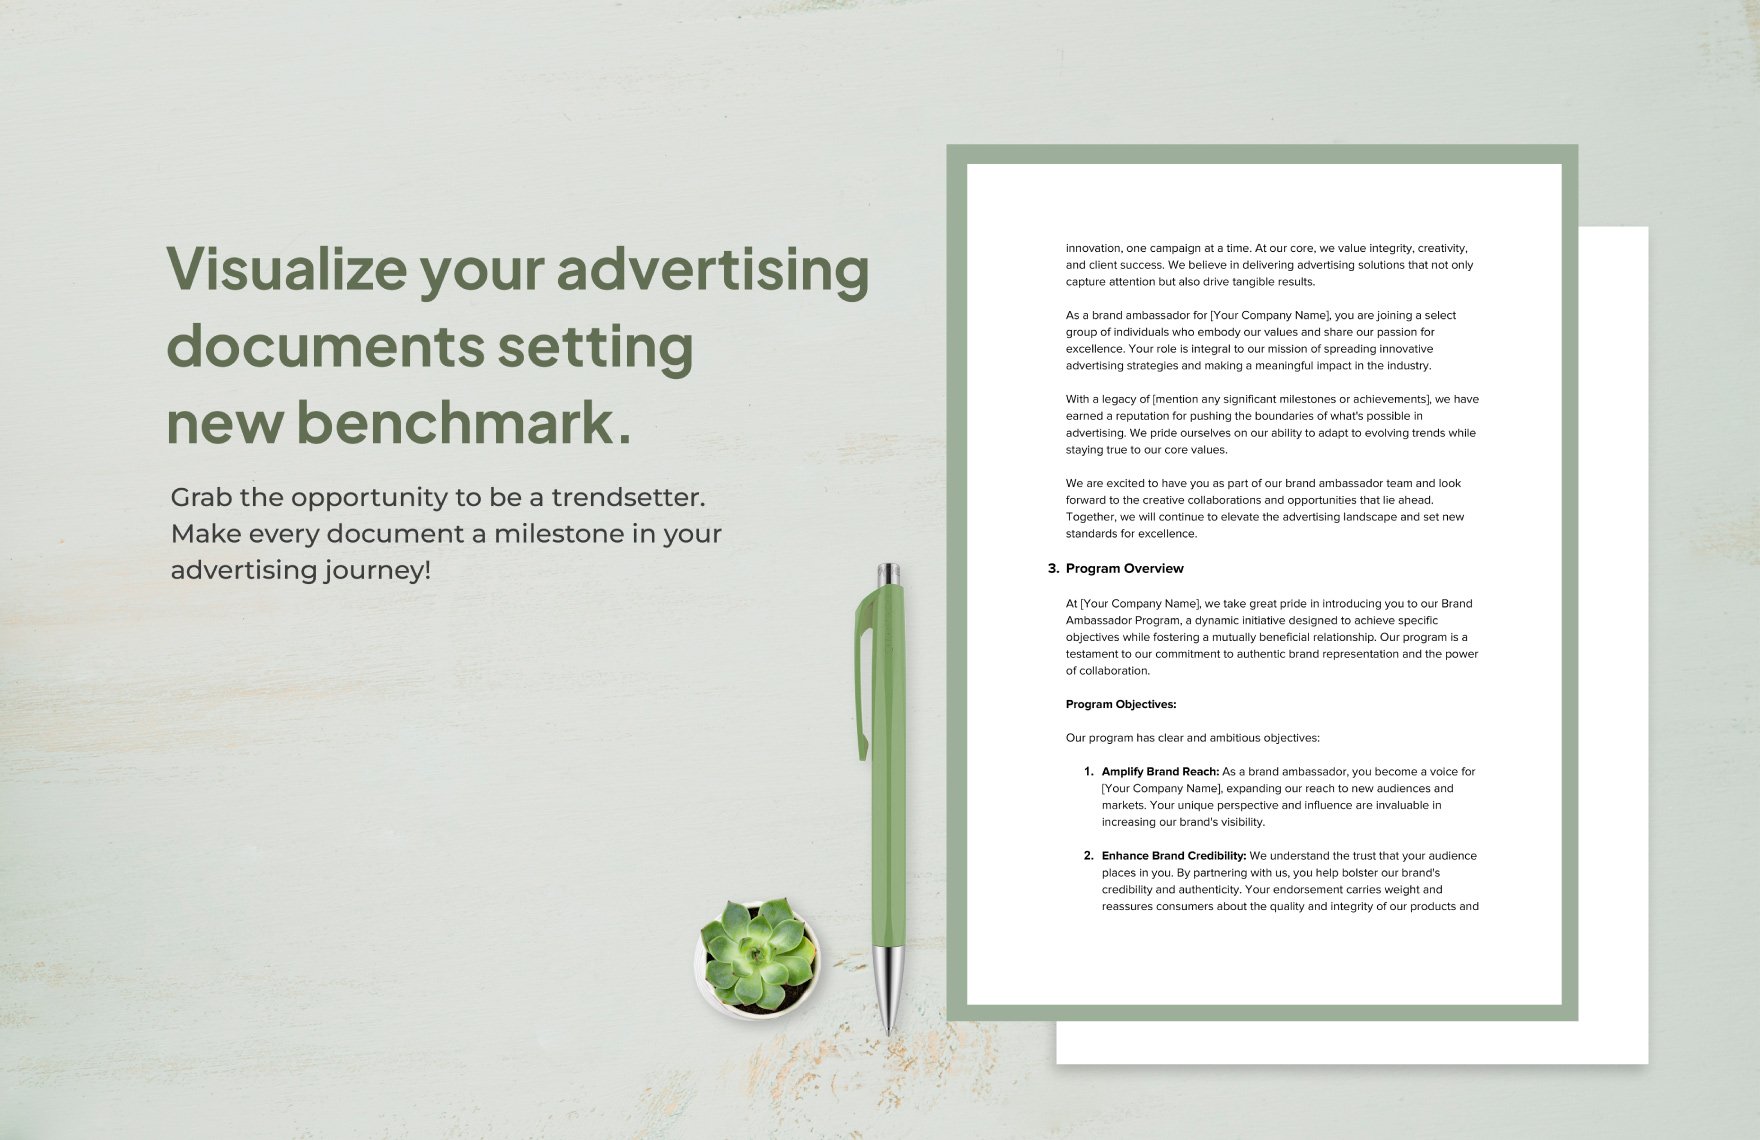 Brand Ambassador Program Advertising Guidelines Template